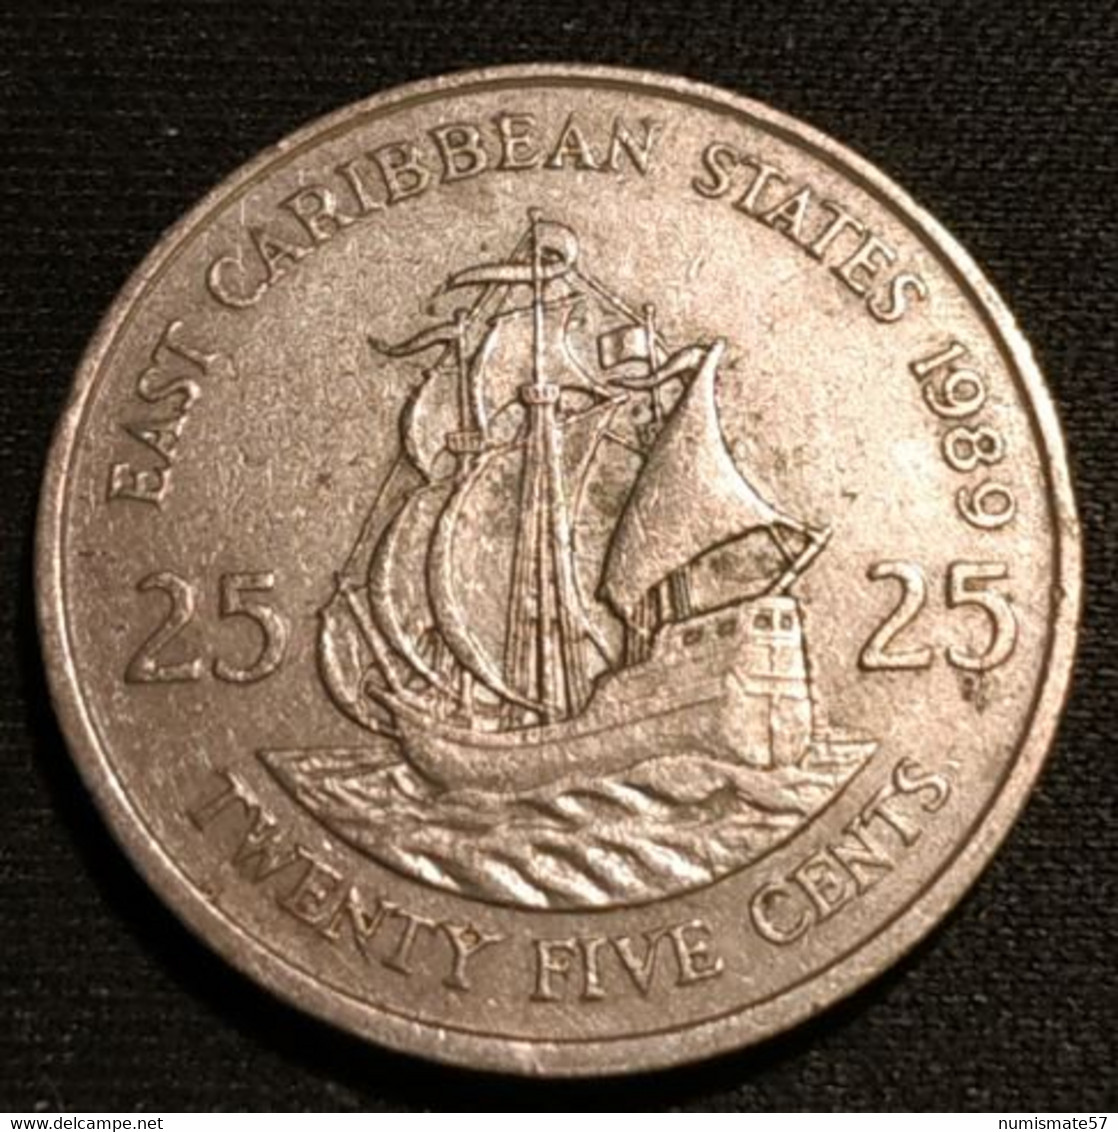 EAST CARIBBEAN STATES - 25 CENTS 1989 - Elizabeth II - 2e Effigie - KM 14 - Caraibi Orientali (Stati Dei)